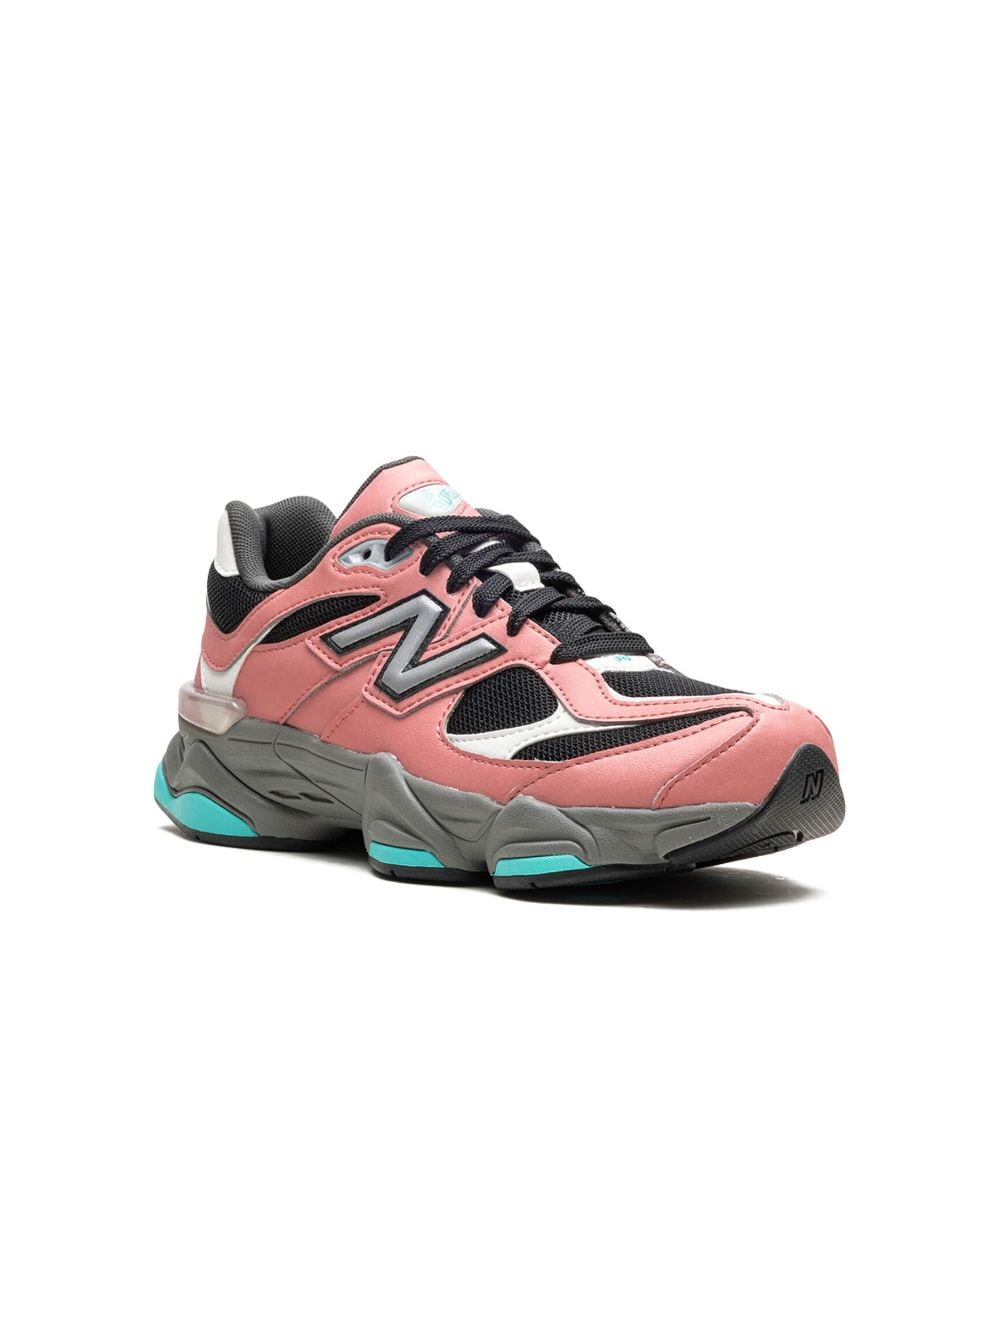 New Balance Kids 9060 Pink Teal Sneakers - Rosa von New Balance Kids